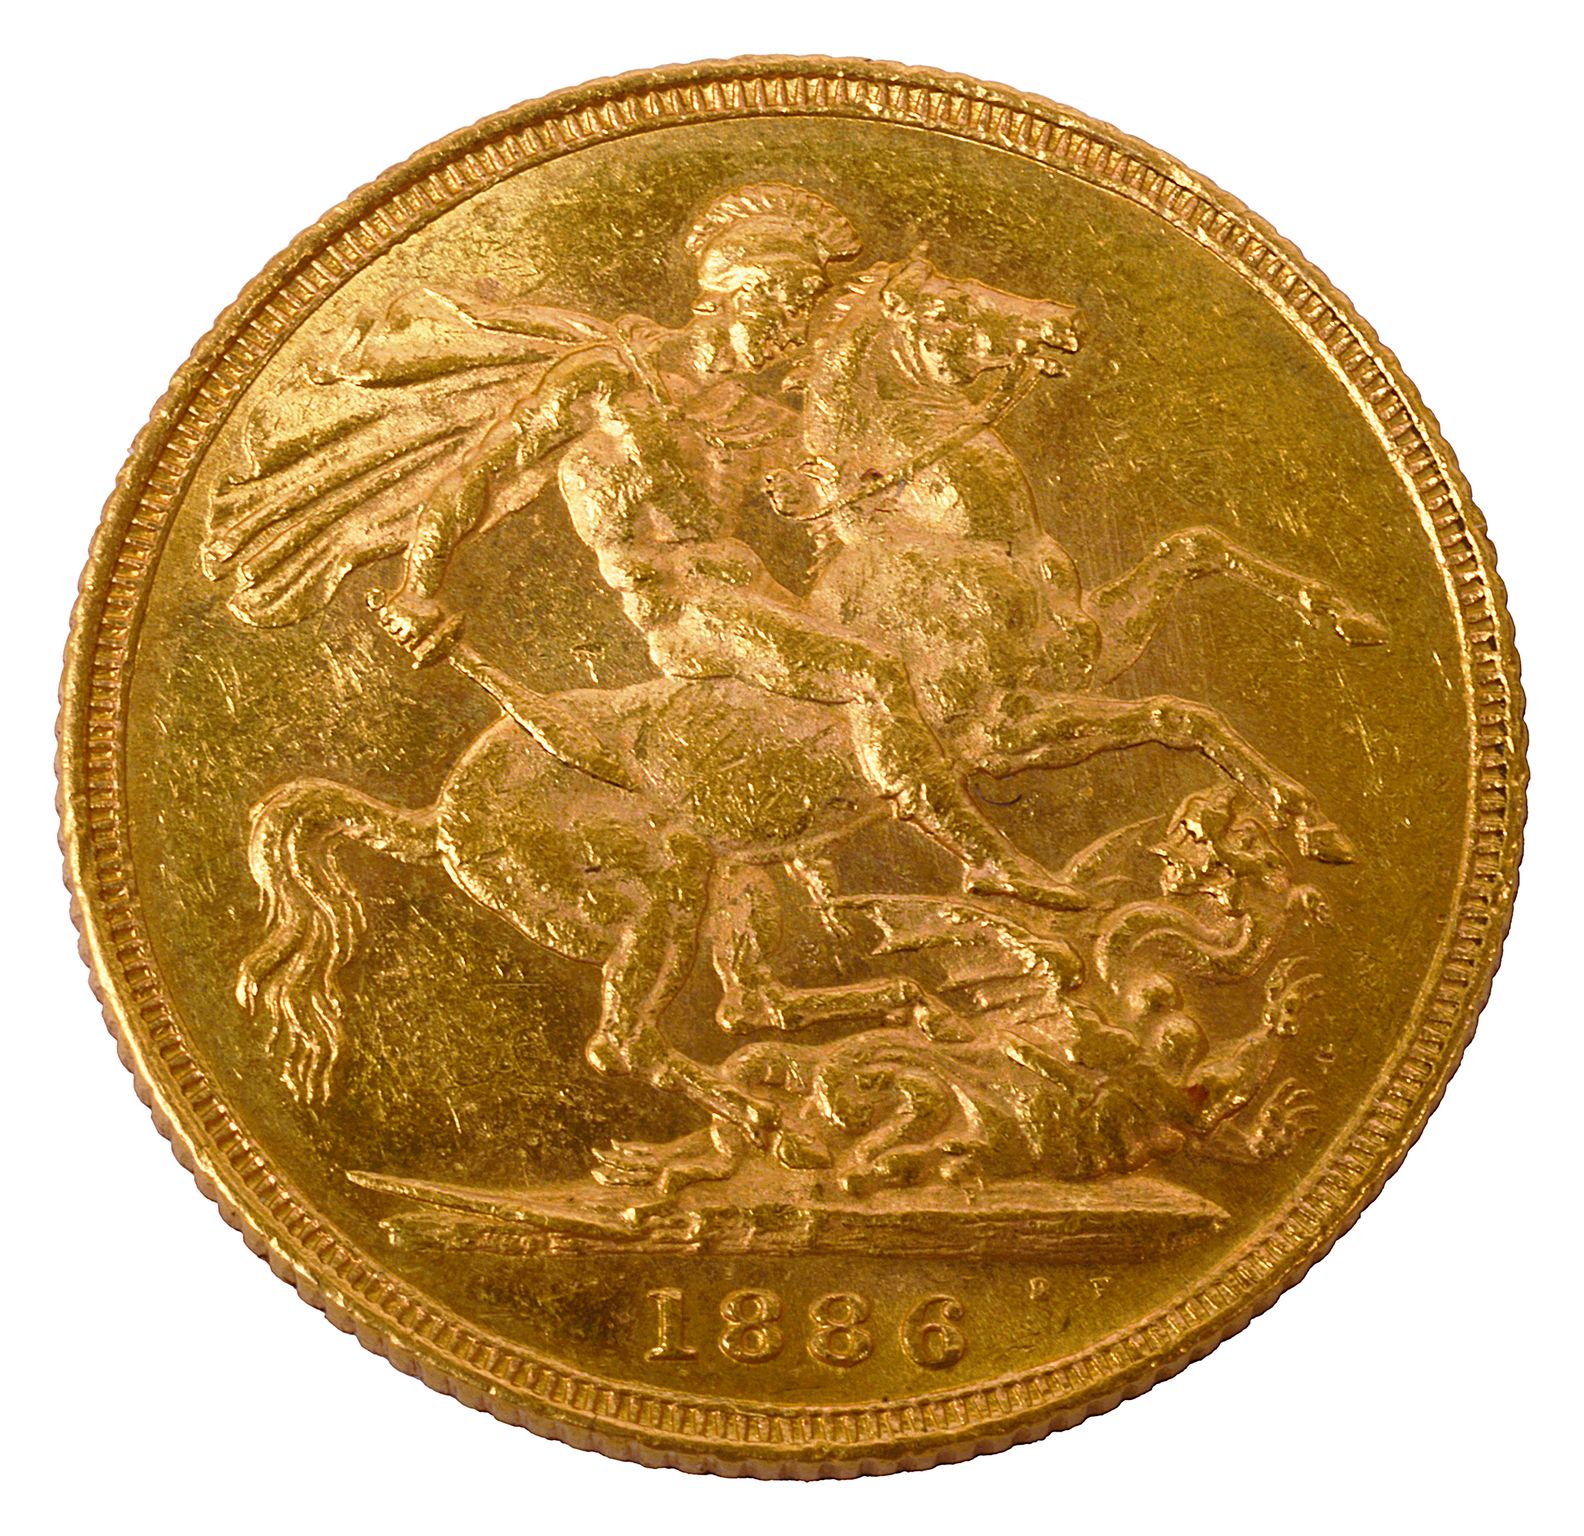 Australia Victoria gold full sovereign, 1886 - Image 2 of 2